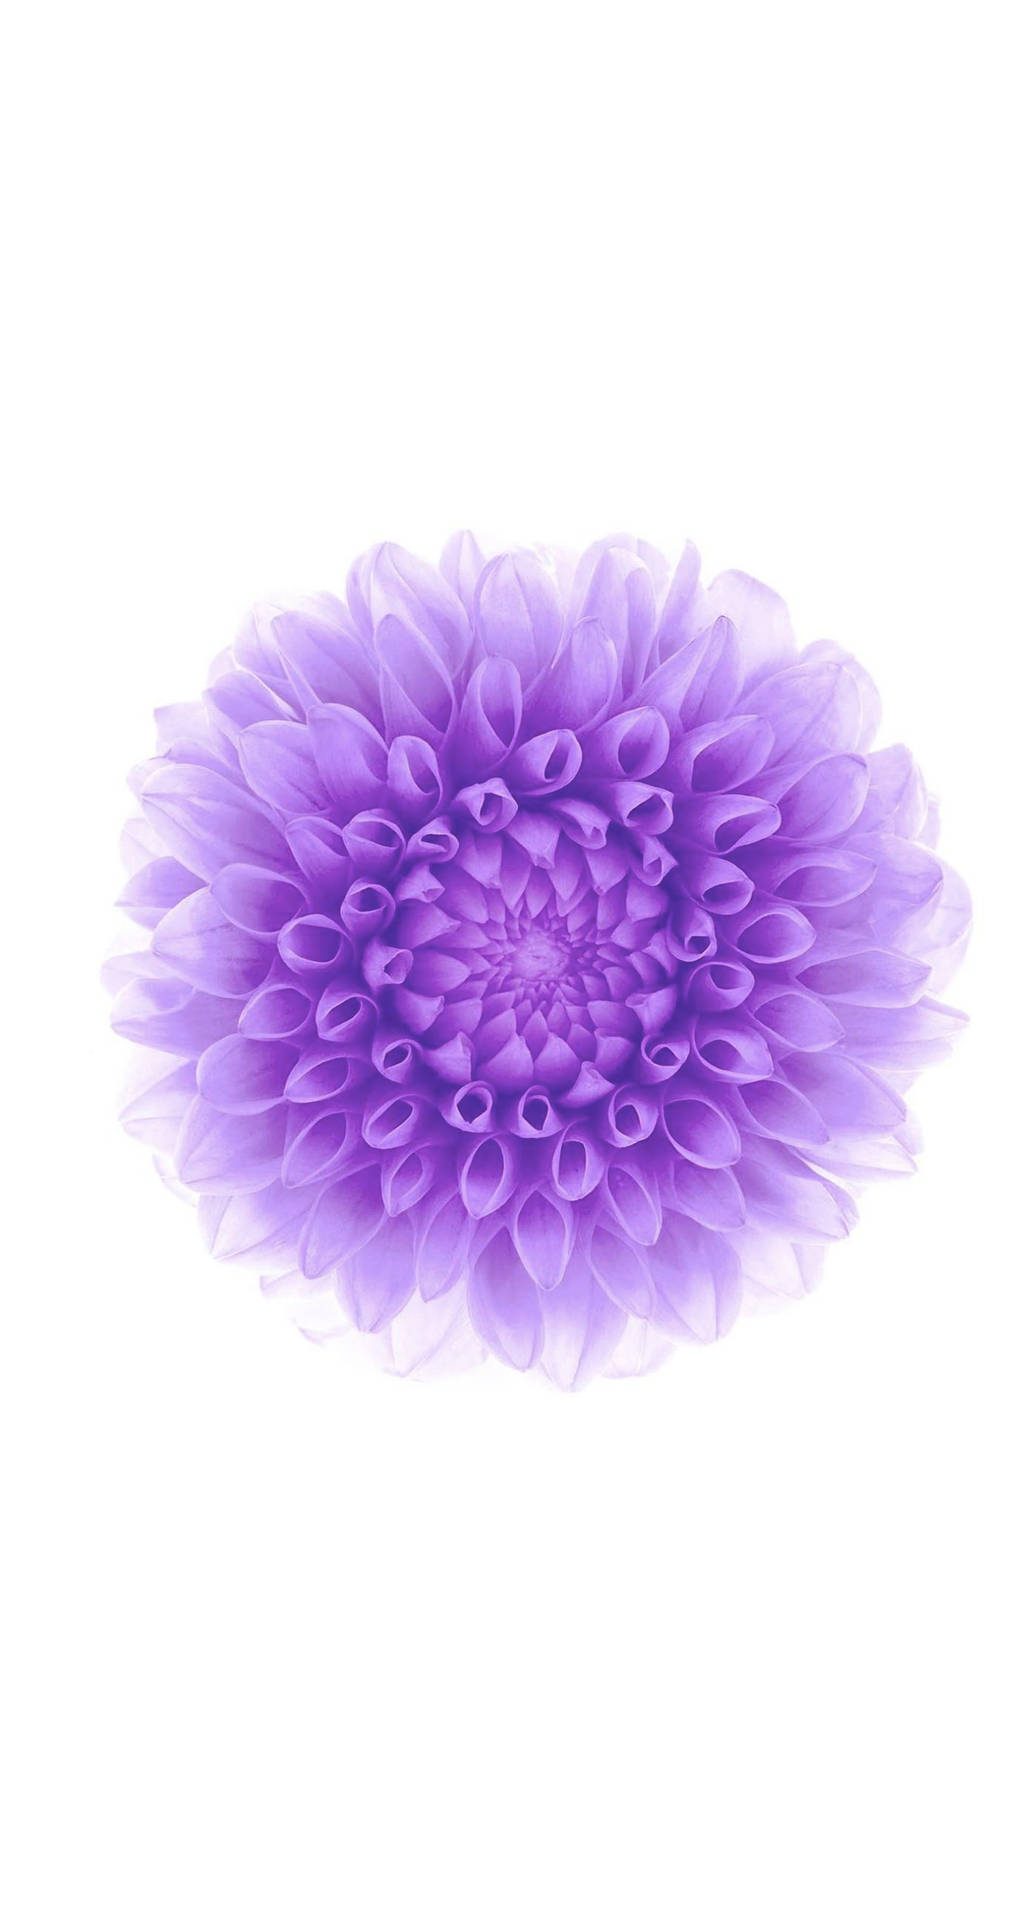 Flower Purple Iphone Wallpaper